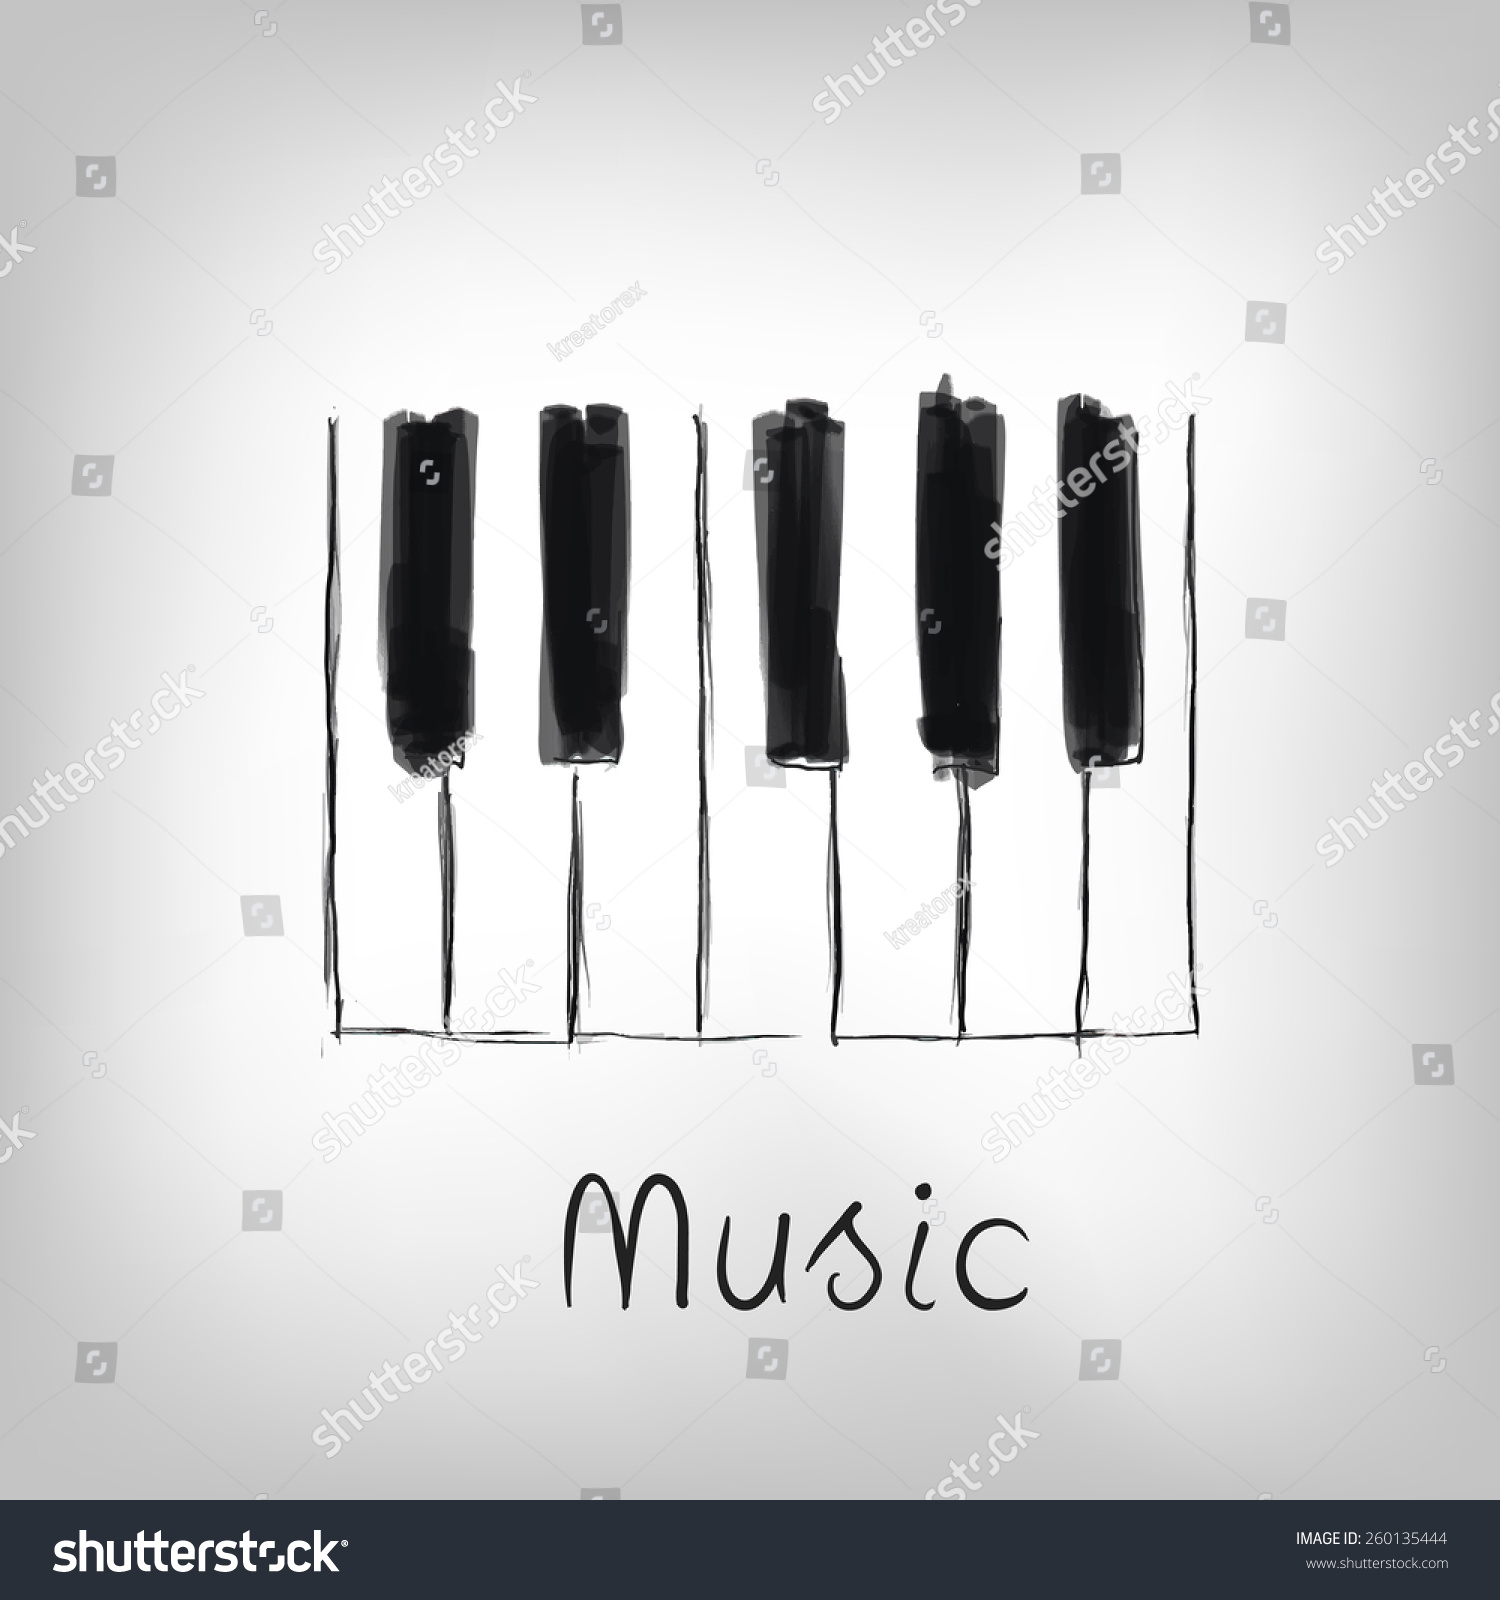 Piano Art Hand Made Piano Keys Stock Vector 260135444 - Shutterstock